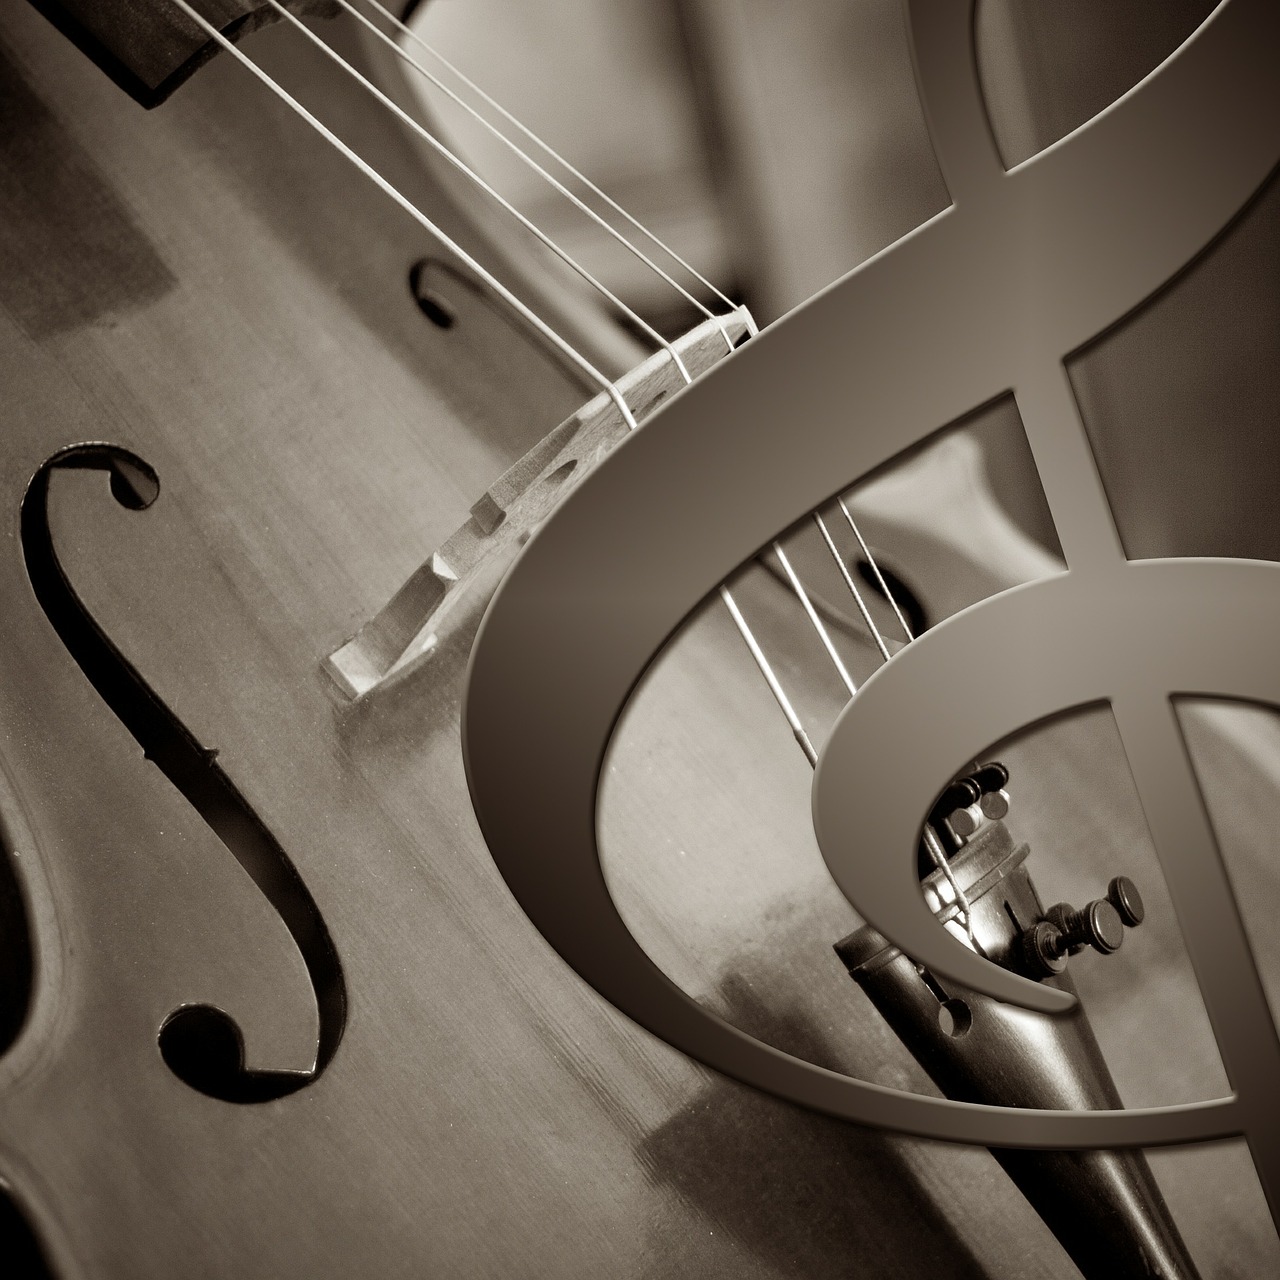 music violin treble clef free photo